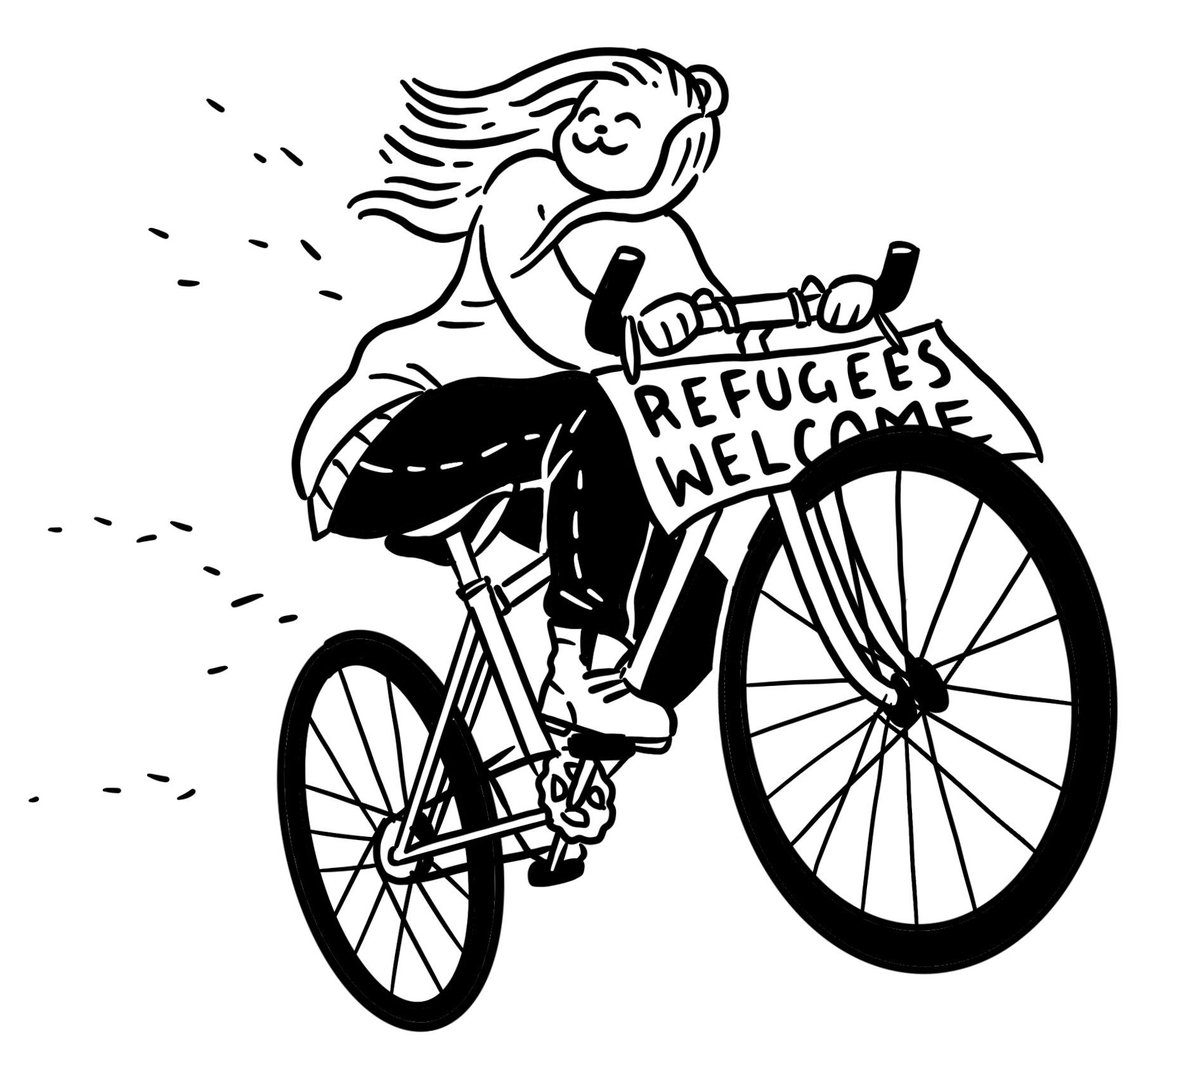 Updating pics from a zine I made 5 years ago @rar_australia #RefugeesWelcome #kidsoffnauru #letthemstay #auspol #illustration #draw